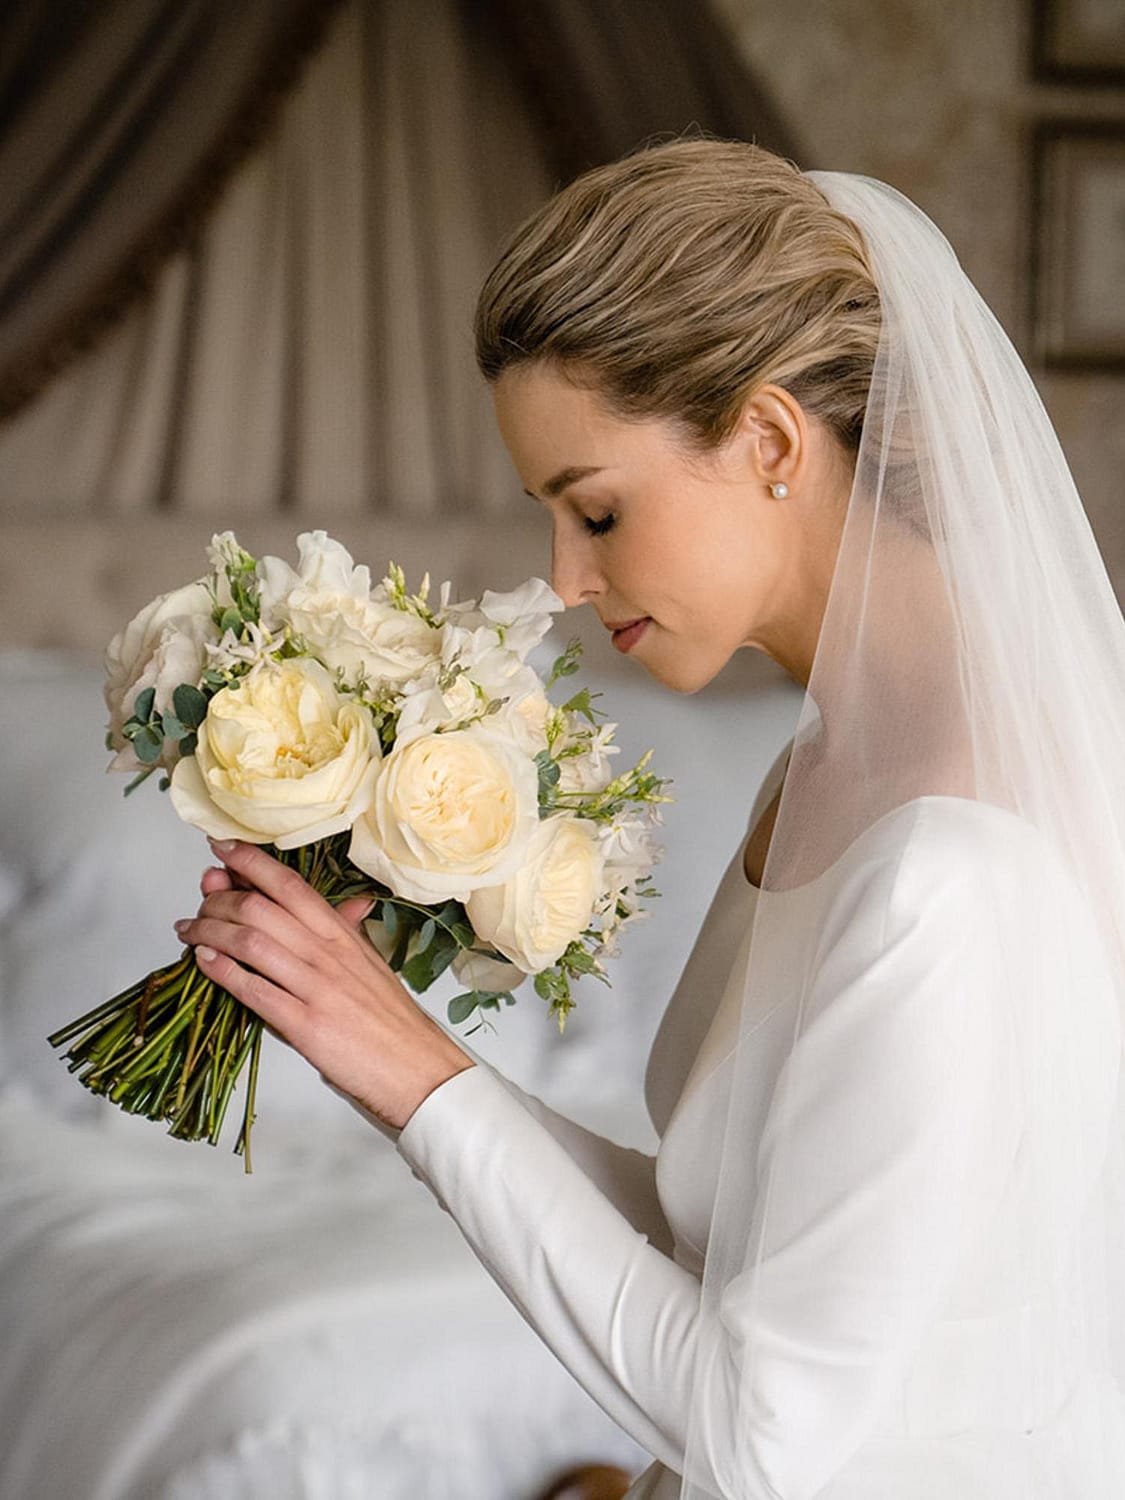 Bride With White Wedding Bouquet